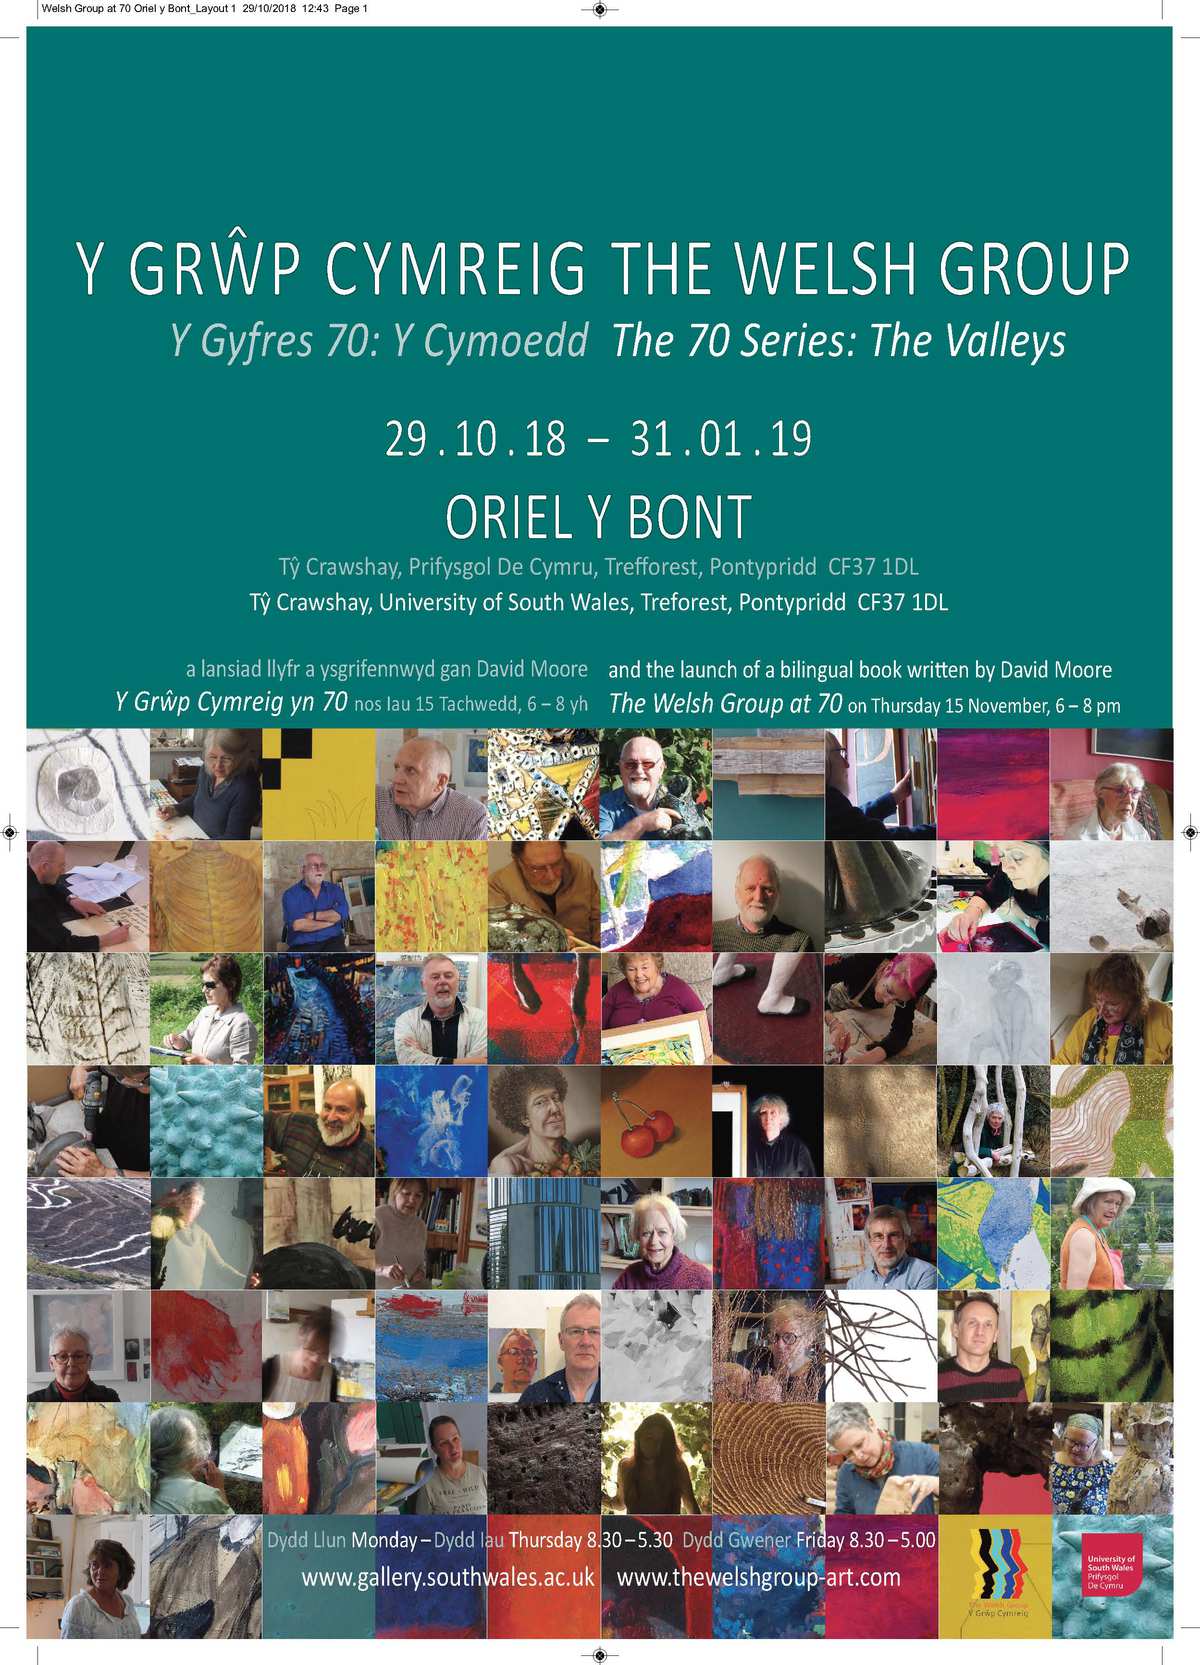 Welsh Group at 70 - Oriel y Bont poster - for printing.jpg